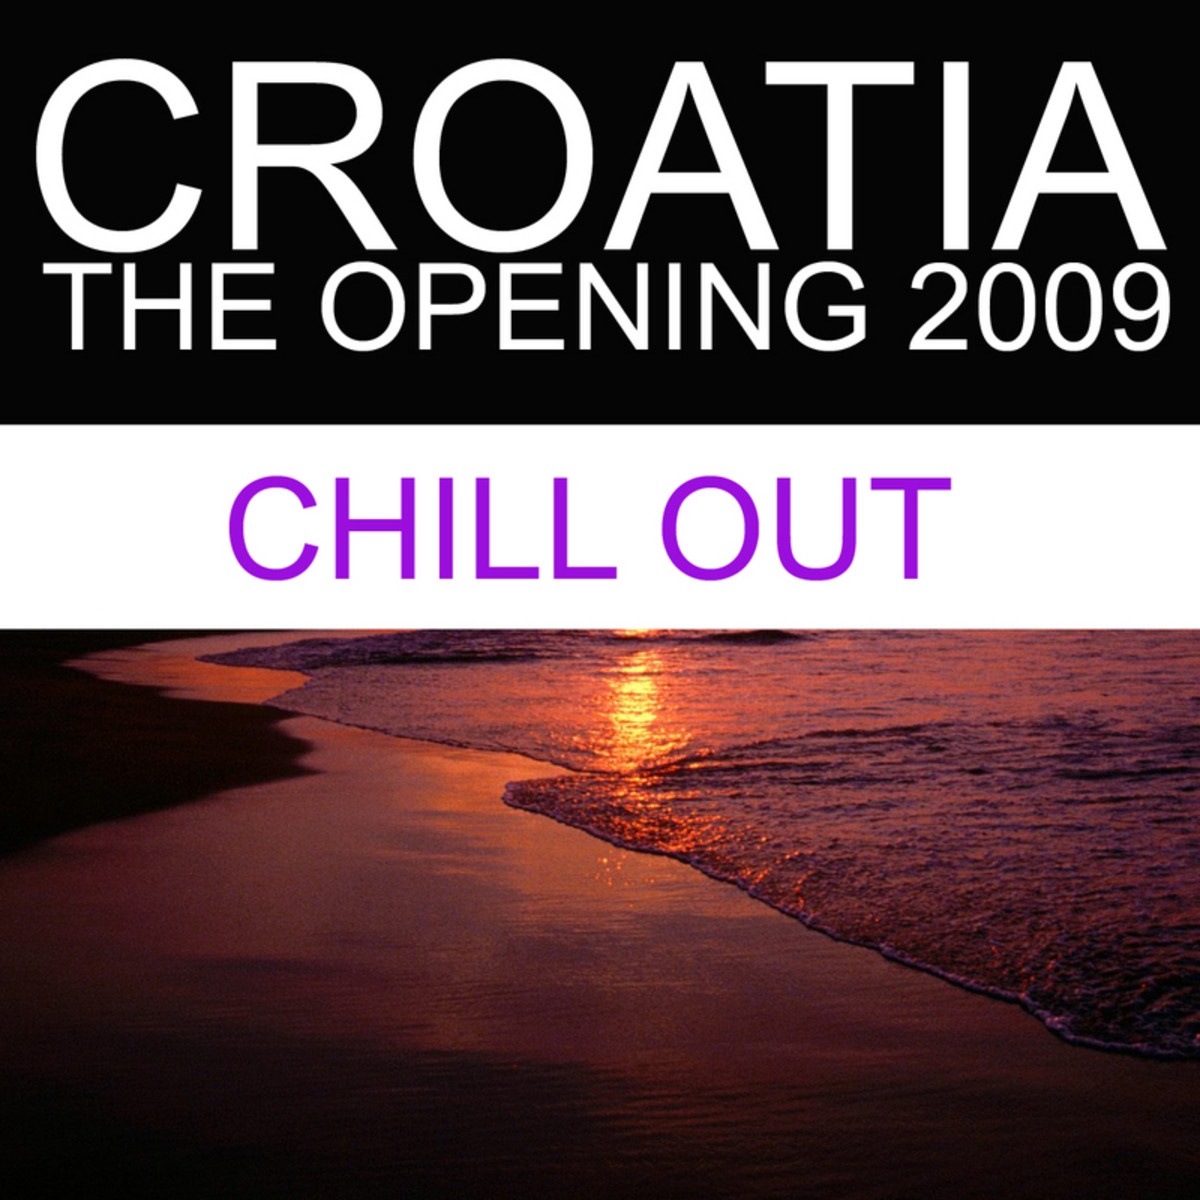 CROATIA - The Opening 2009